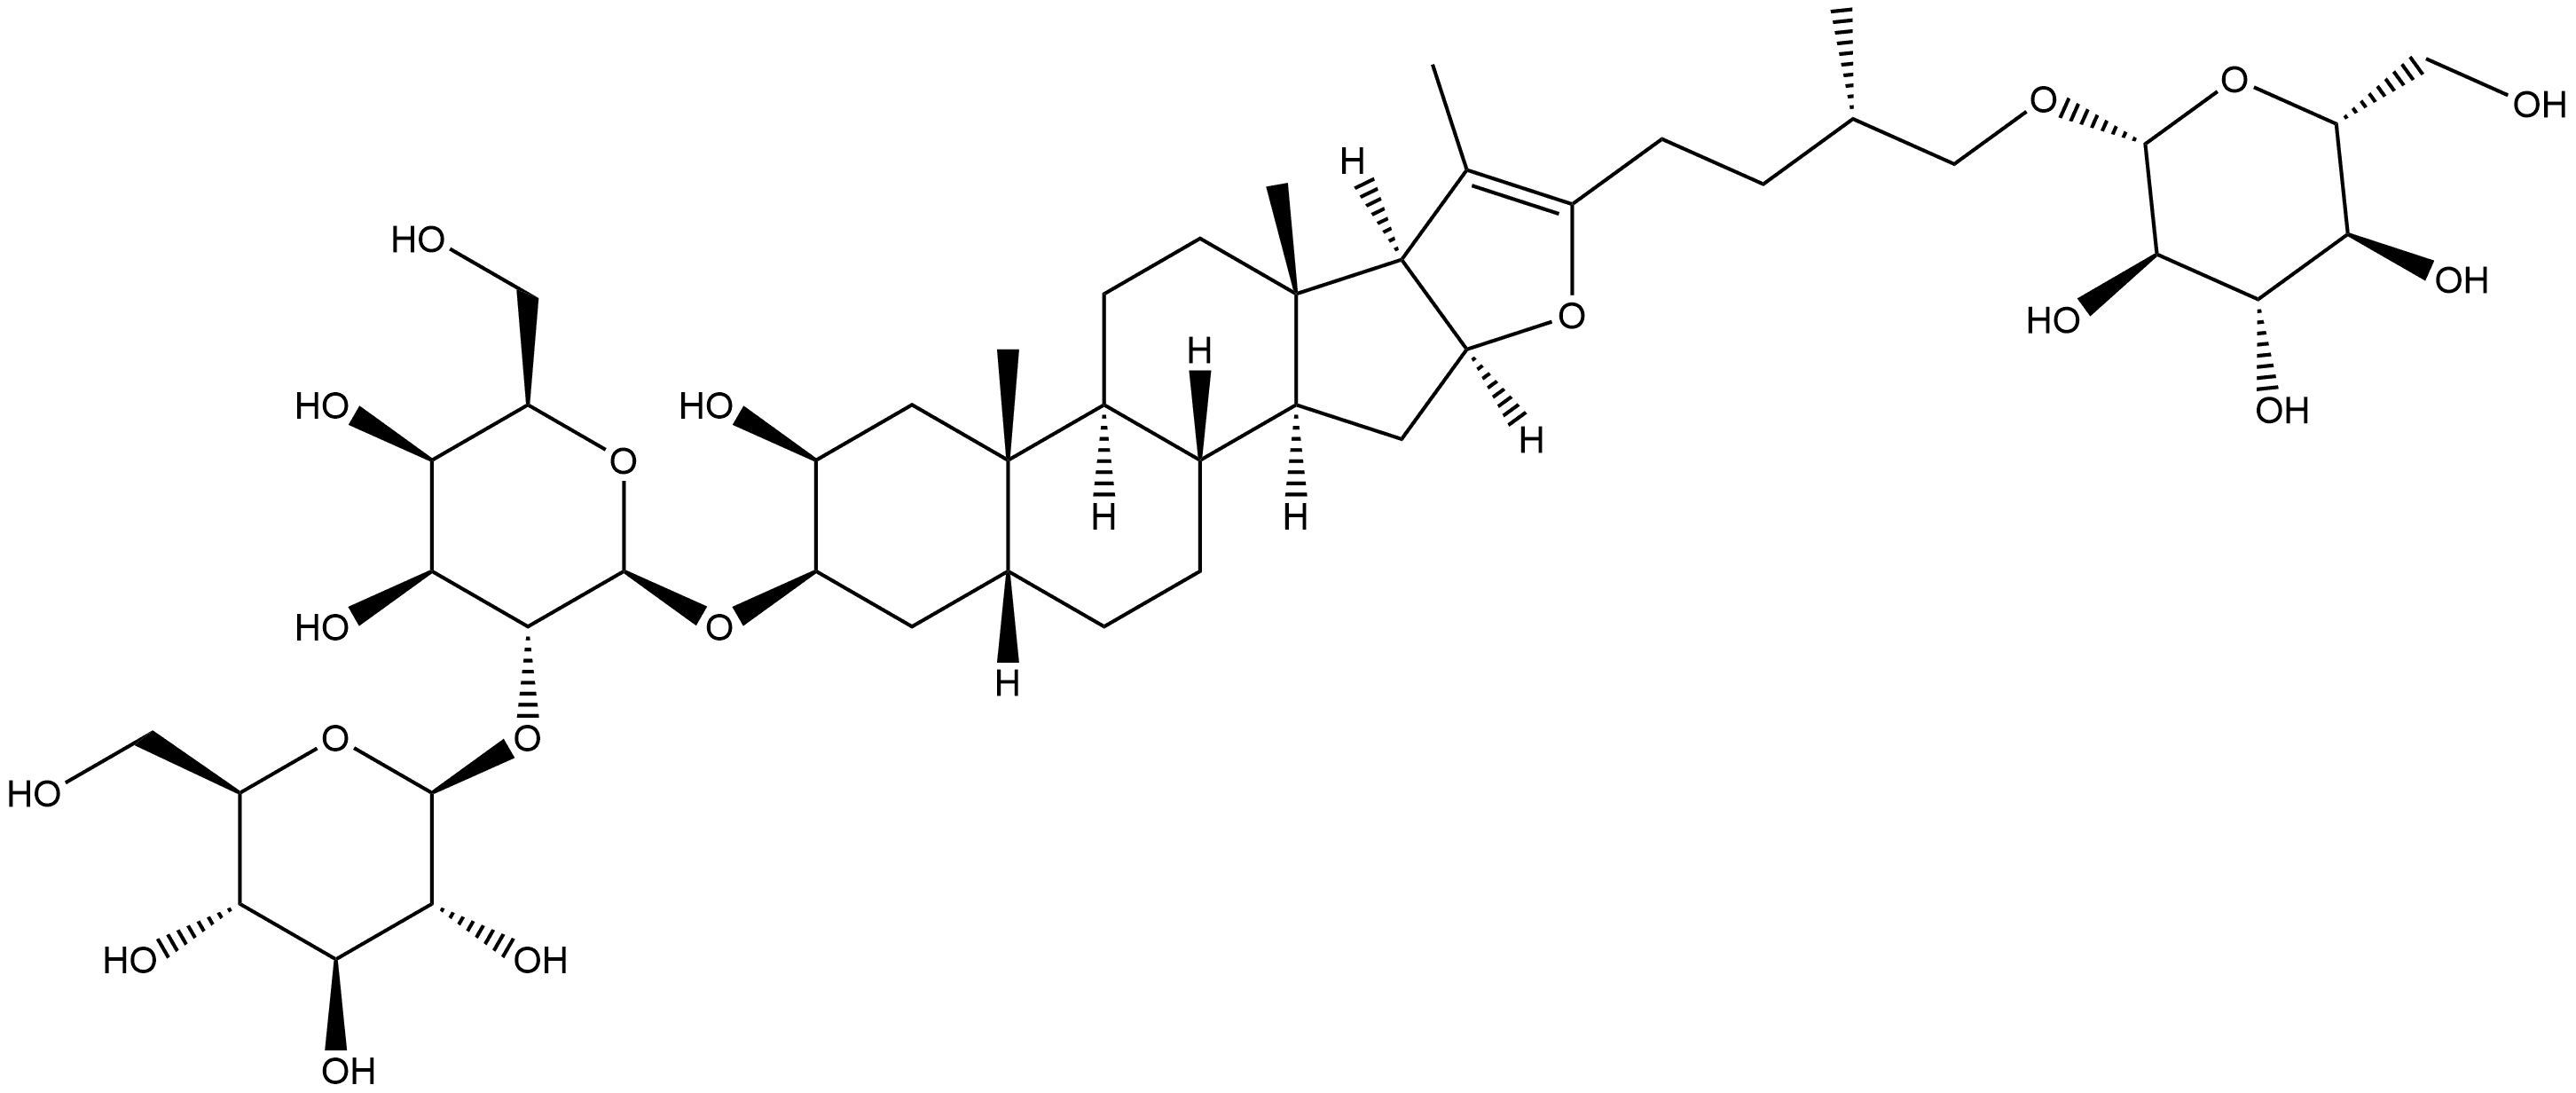 220095-97-6 β-D-Galactopyranoside, (2β,3β,5β,25S)-26-(β-D-glucopyranosyloxy)-2-hydroxyfurost-20(22)-en-3-yl 2-O-β-D-glucopyranosyl-